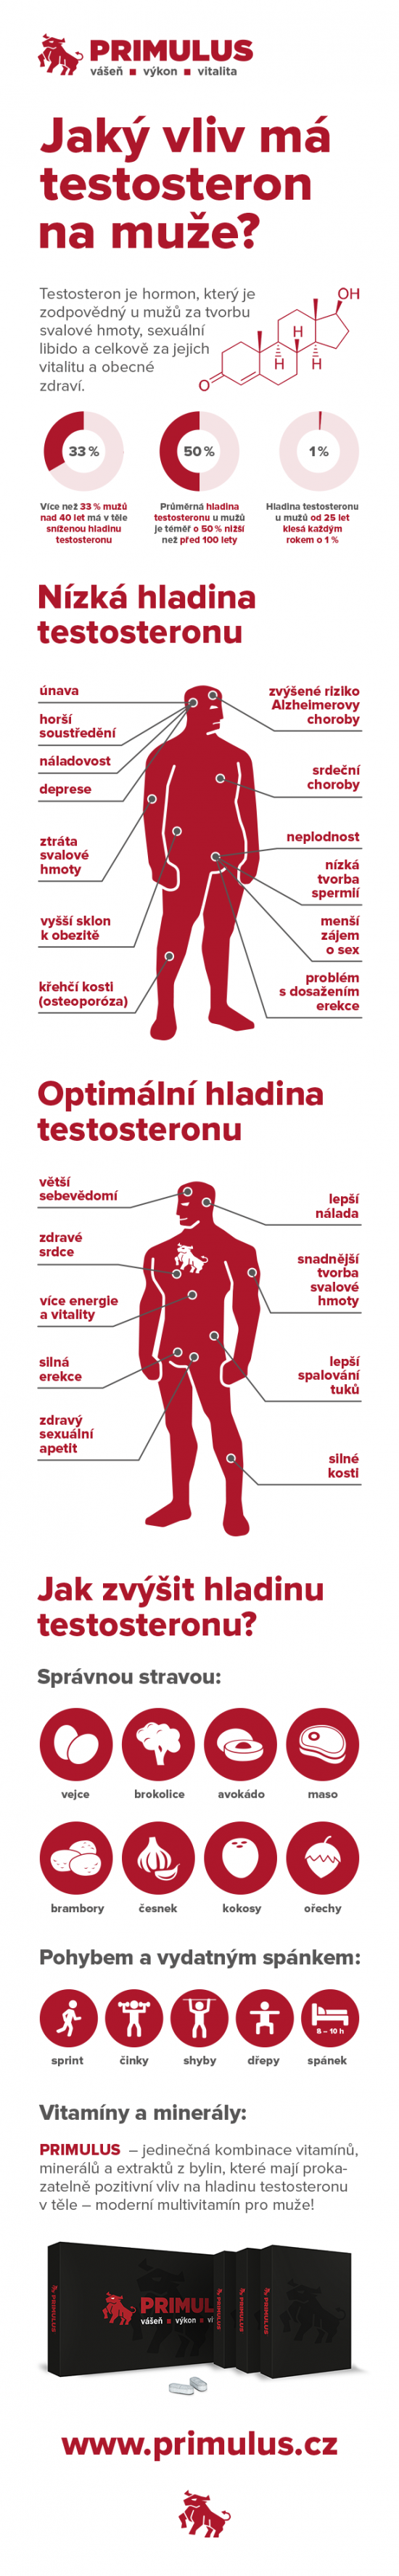 primulus-infografika-hladina_testosteronu